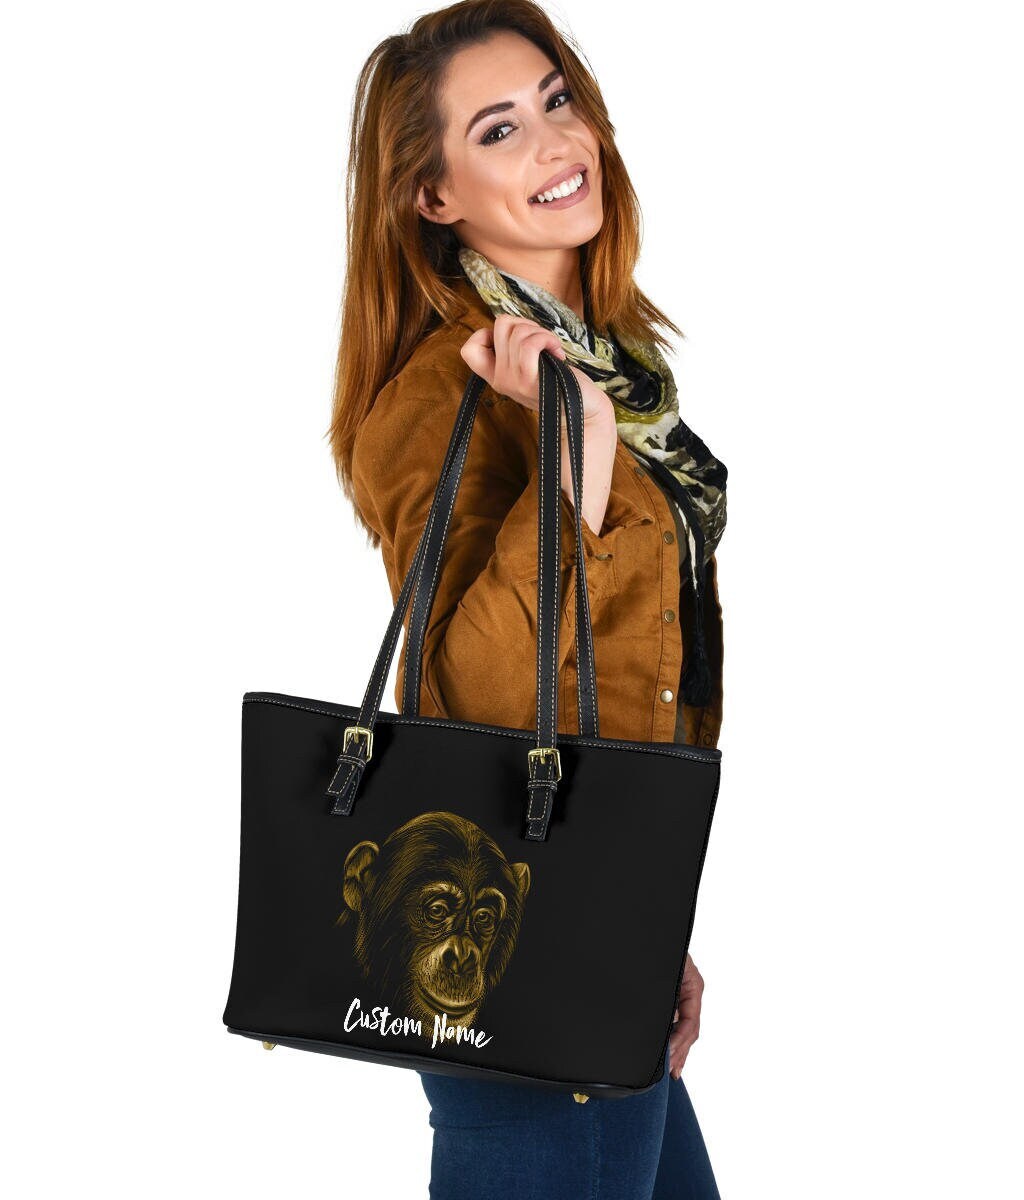 1pc Handmade Cowhide Leather Cartoon Monkey Shoulder Bags Crossbody Bags  Mini Portable Coin Purse Cute Handbag Keys Earphone Storage Bag Jewelry